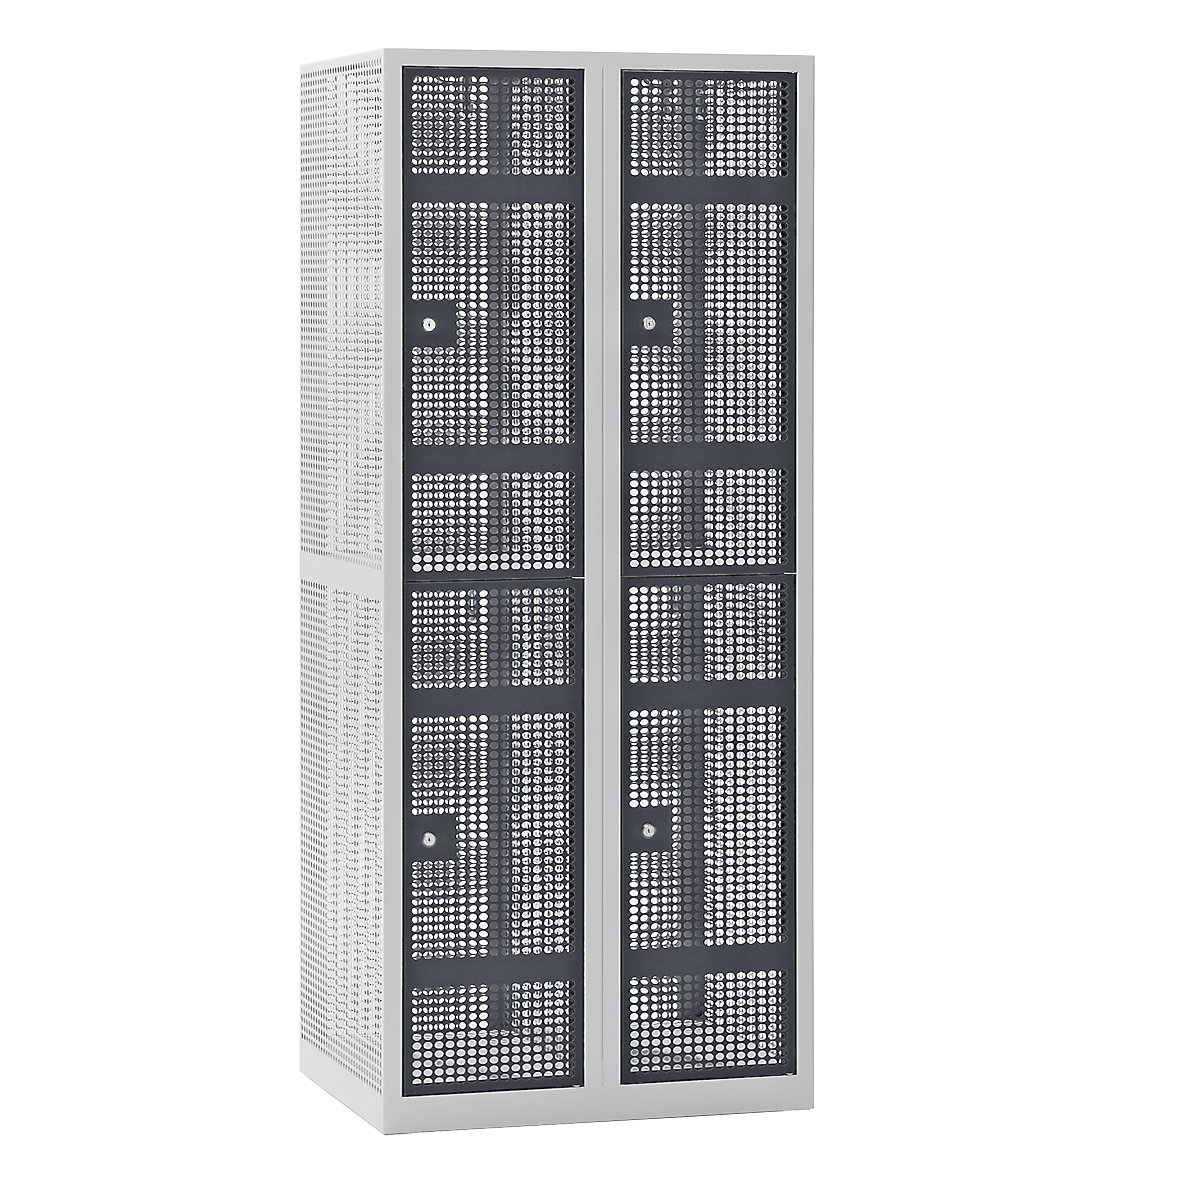 AMSTERDAM perforated sheet steel locker, width 800 mm – eurokraft pro, compartment 400 mm, 4 compartments, cylinder lock, basalt grey doors